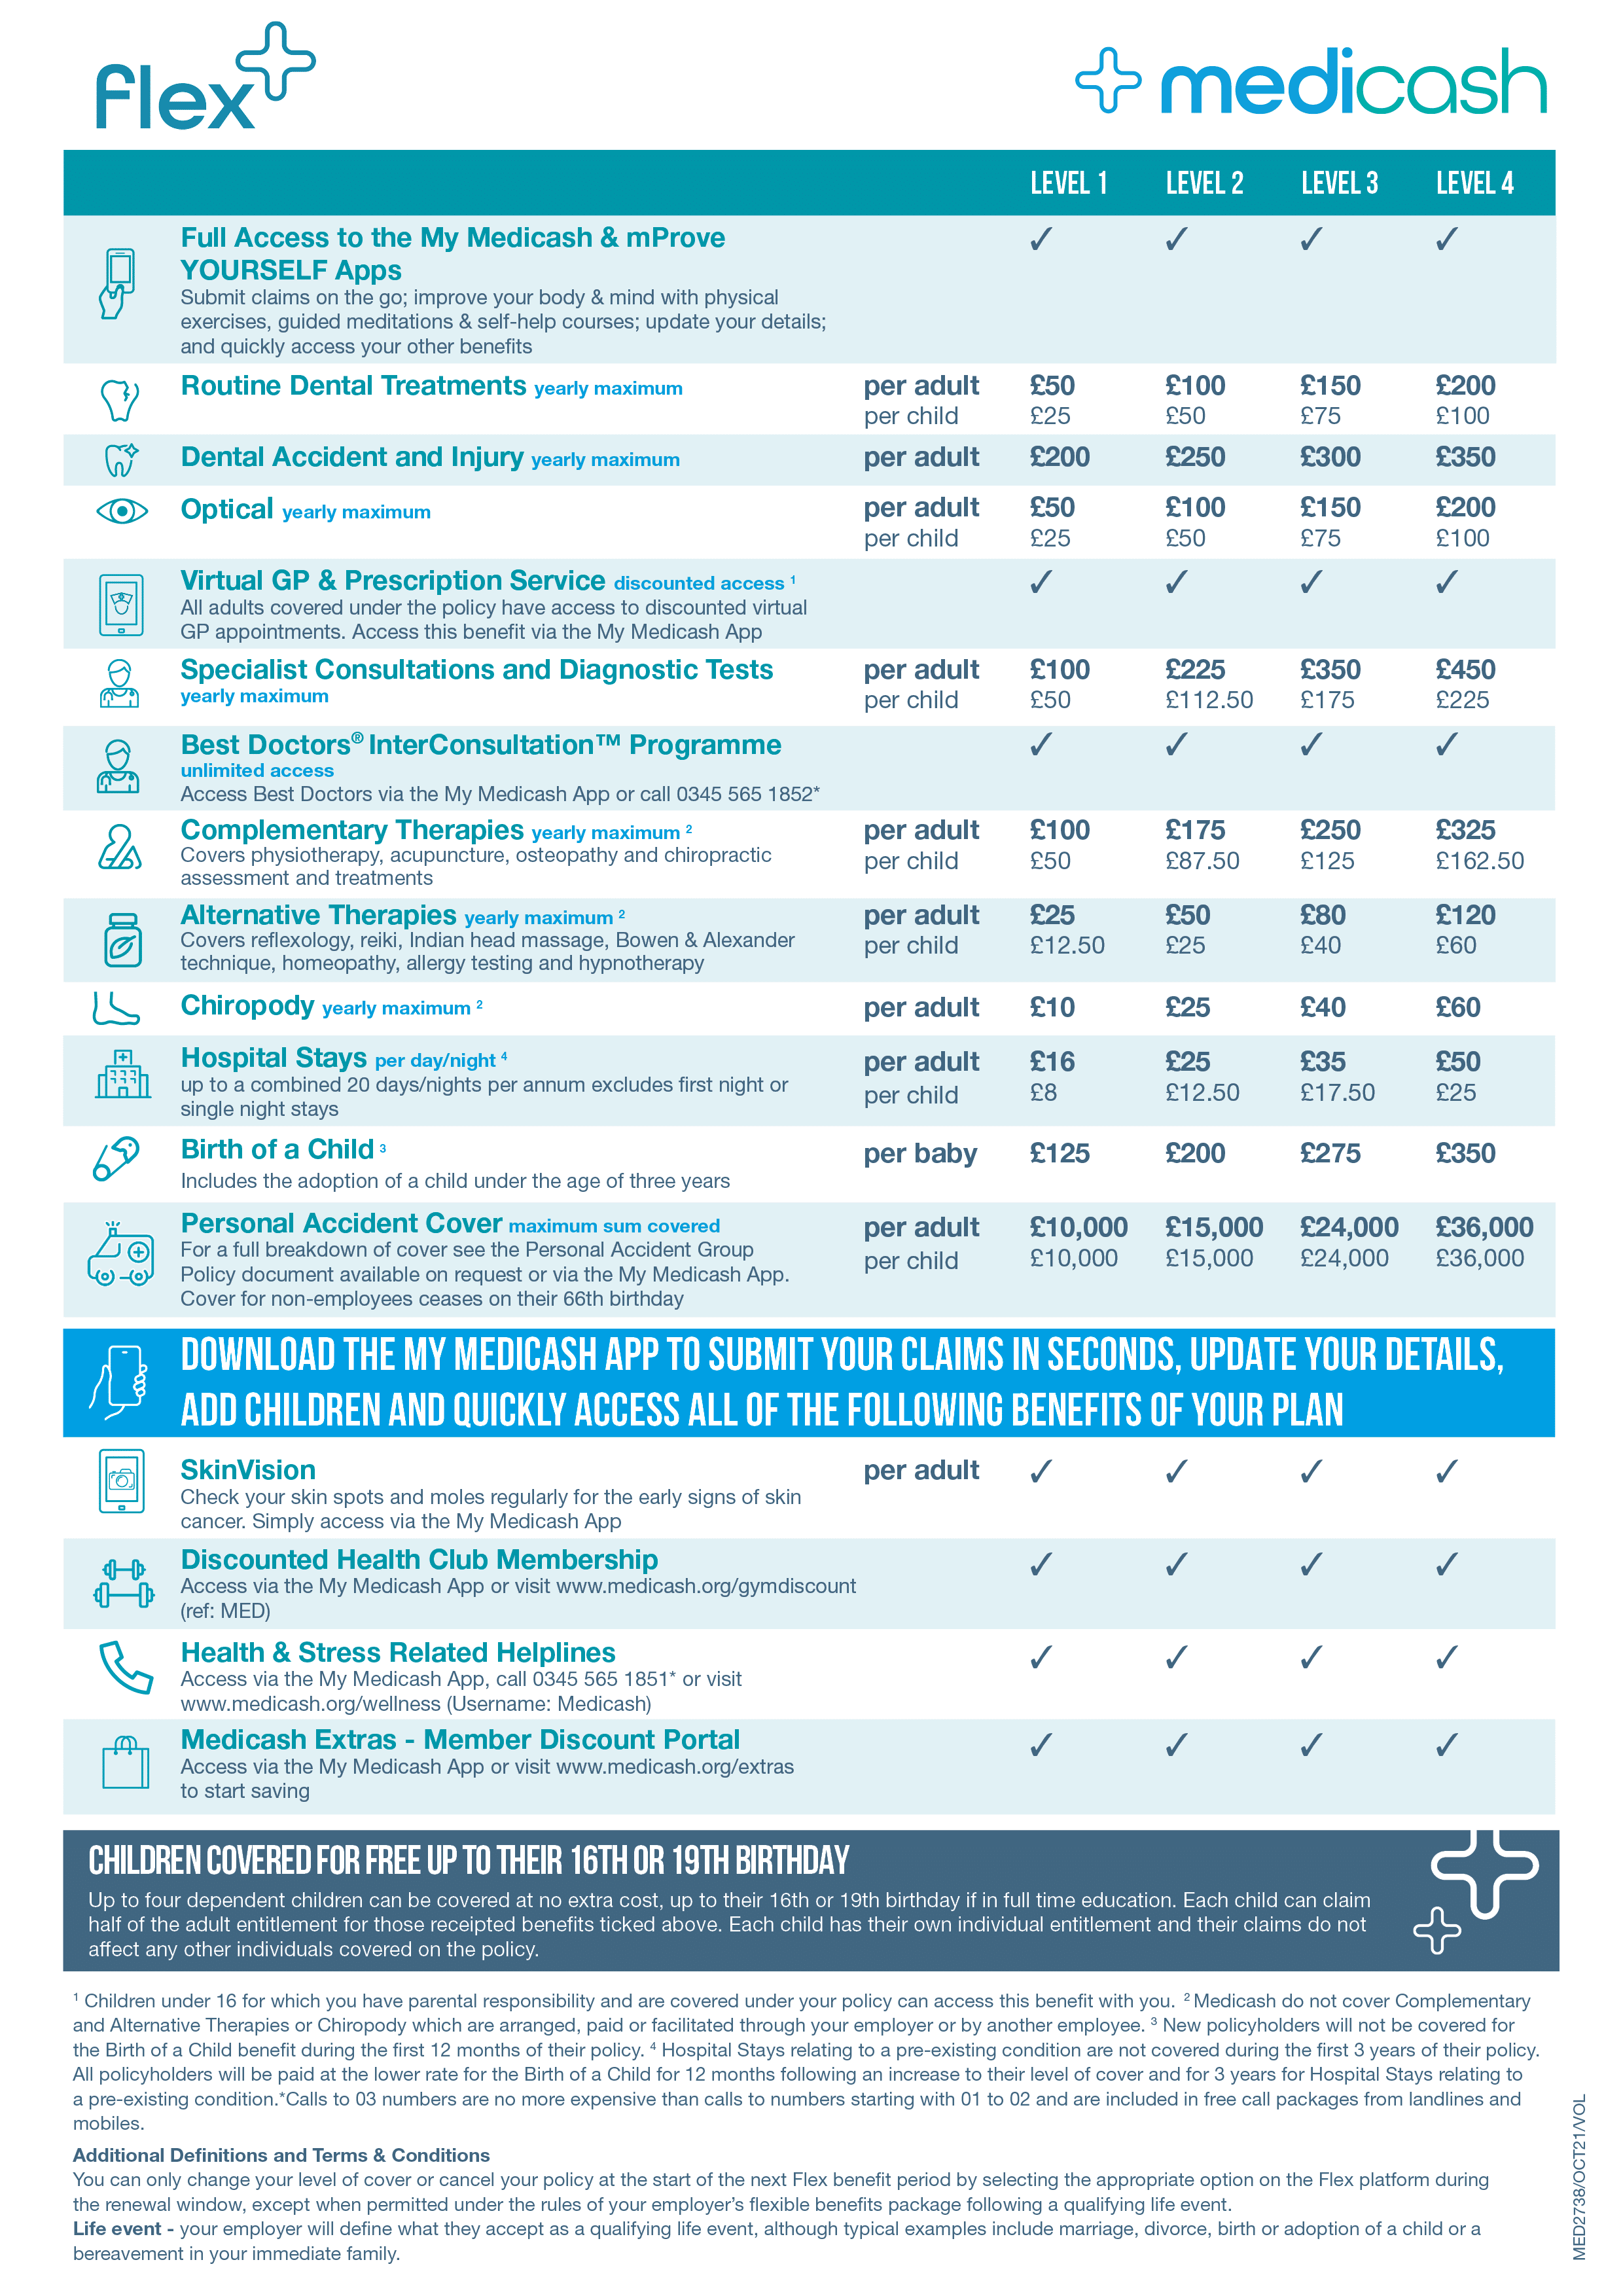 Benefits table of Medicash Flex plan